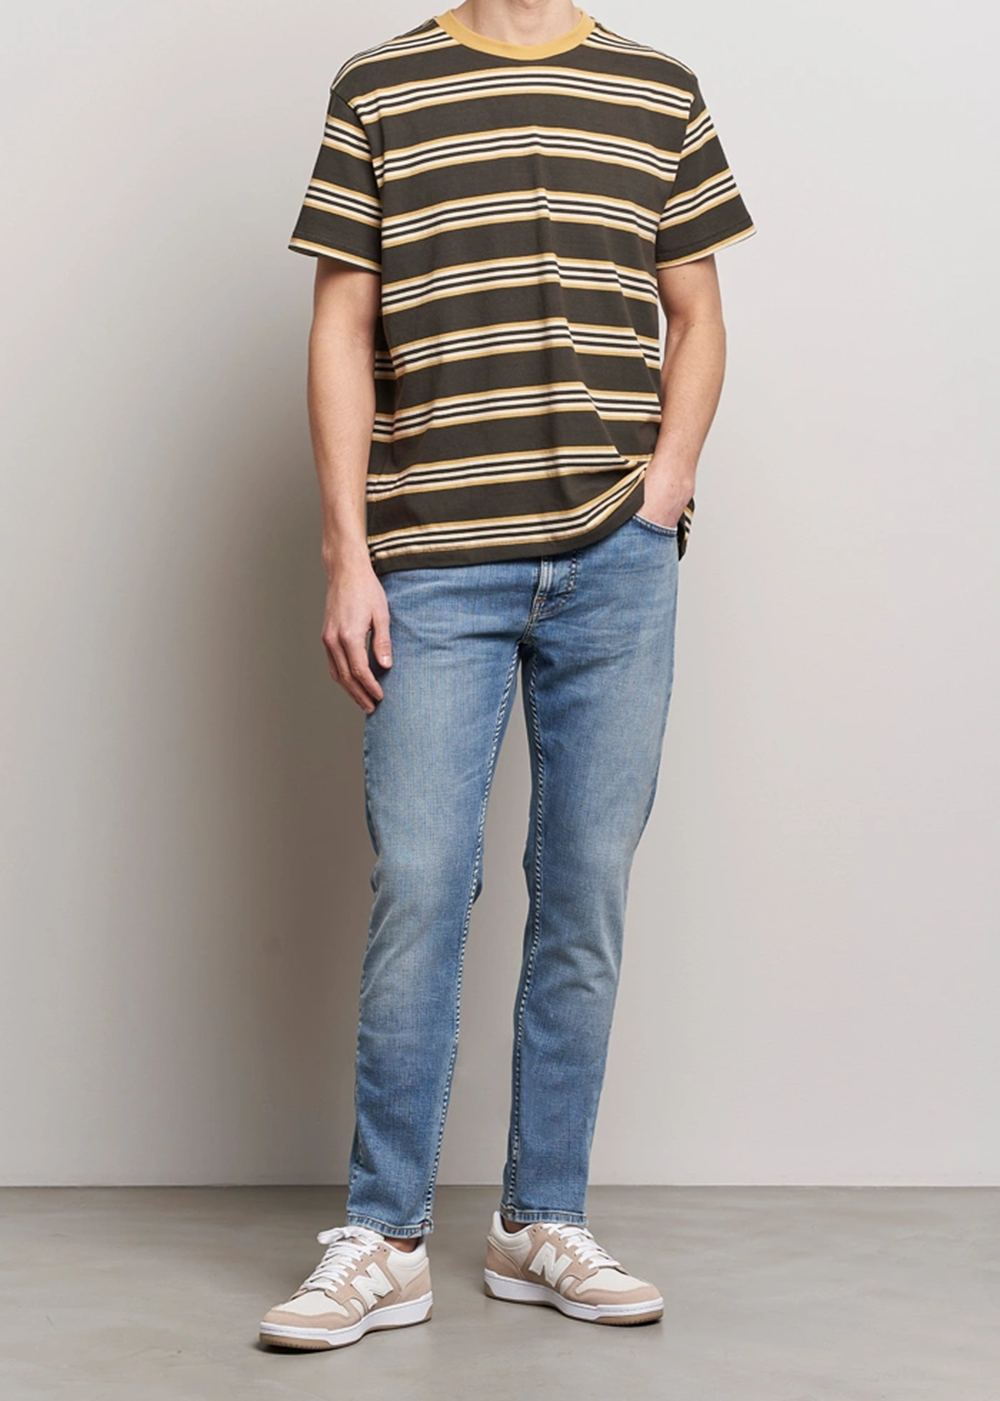 Leif Mud Stripe T-Shirt